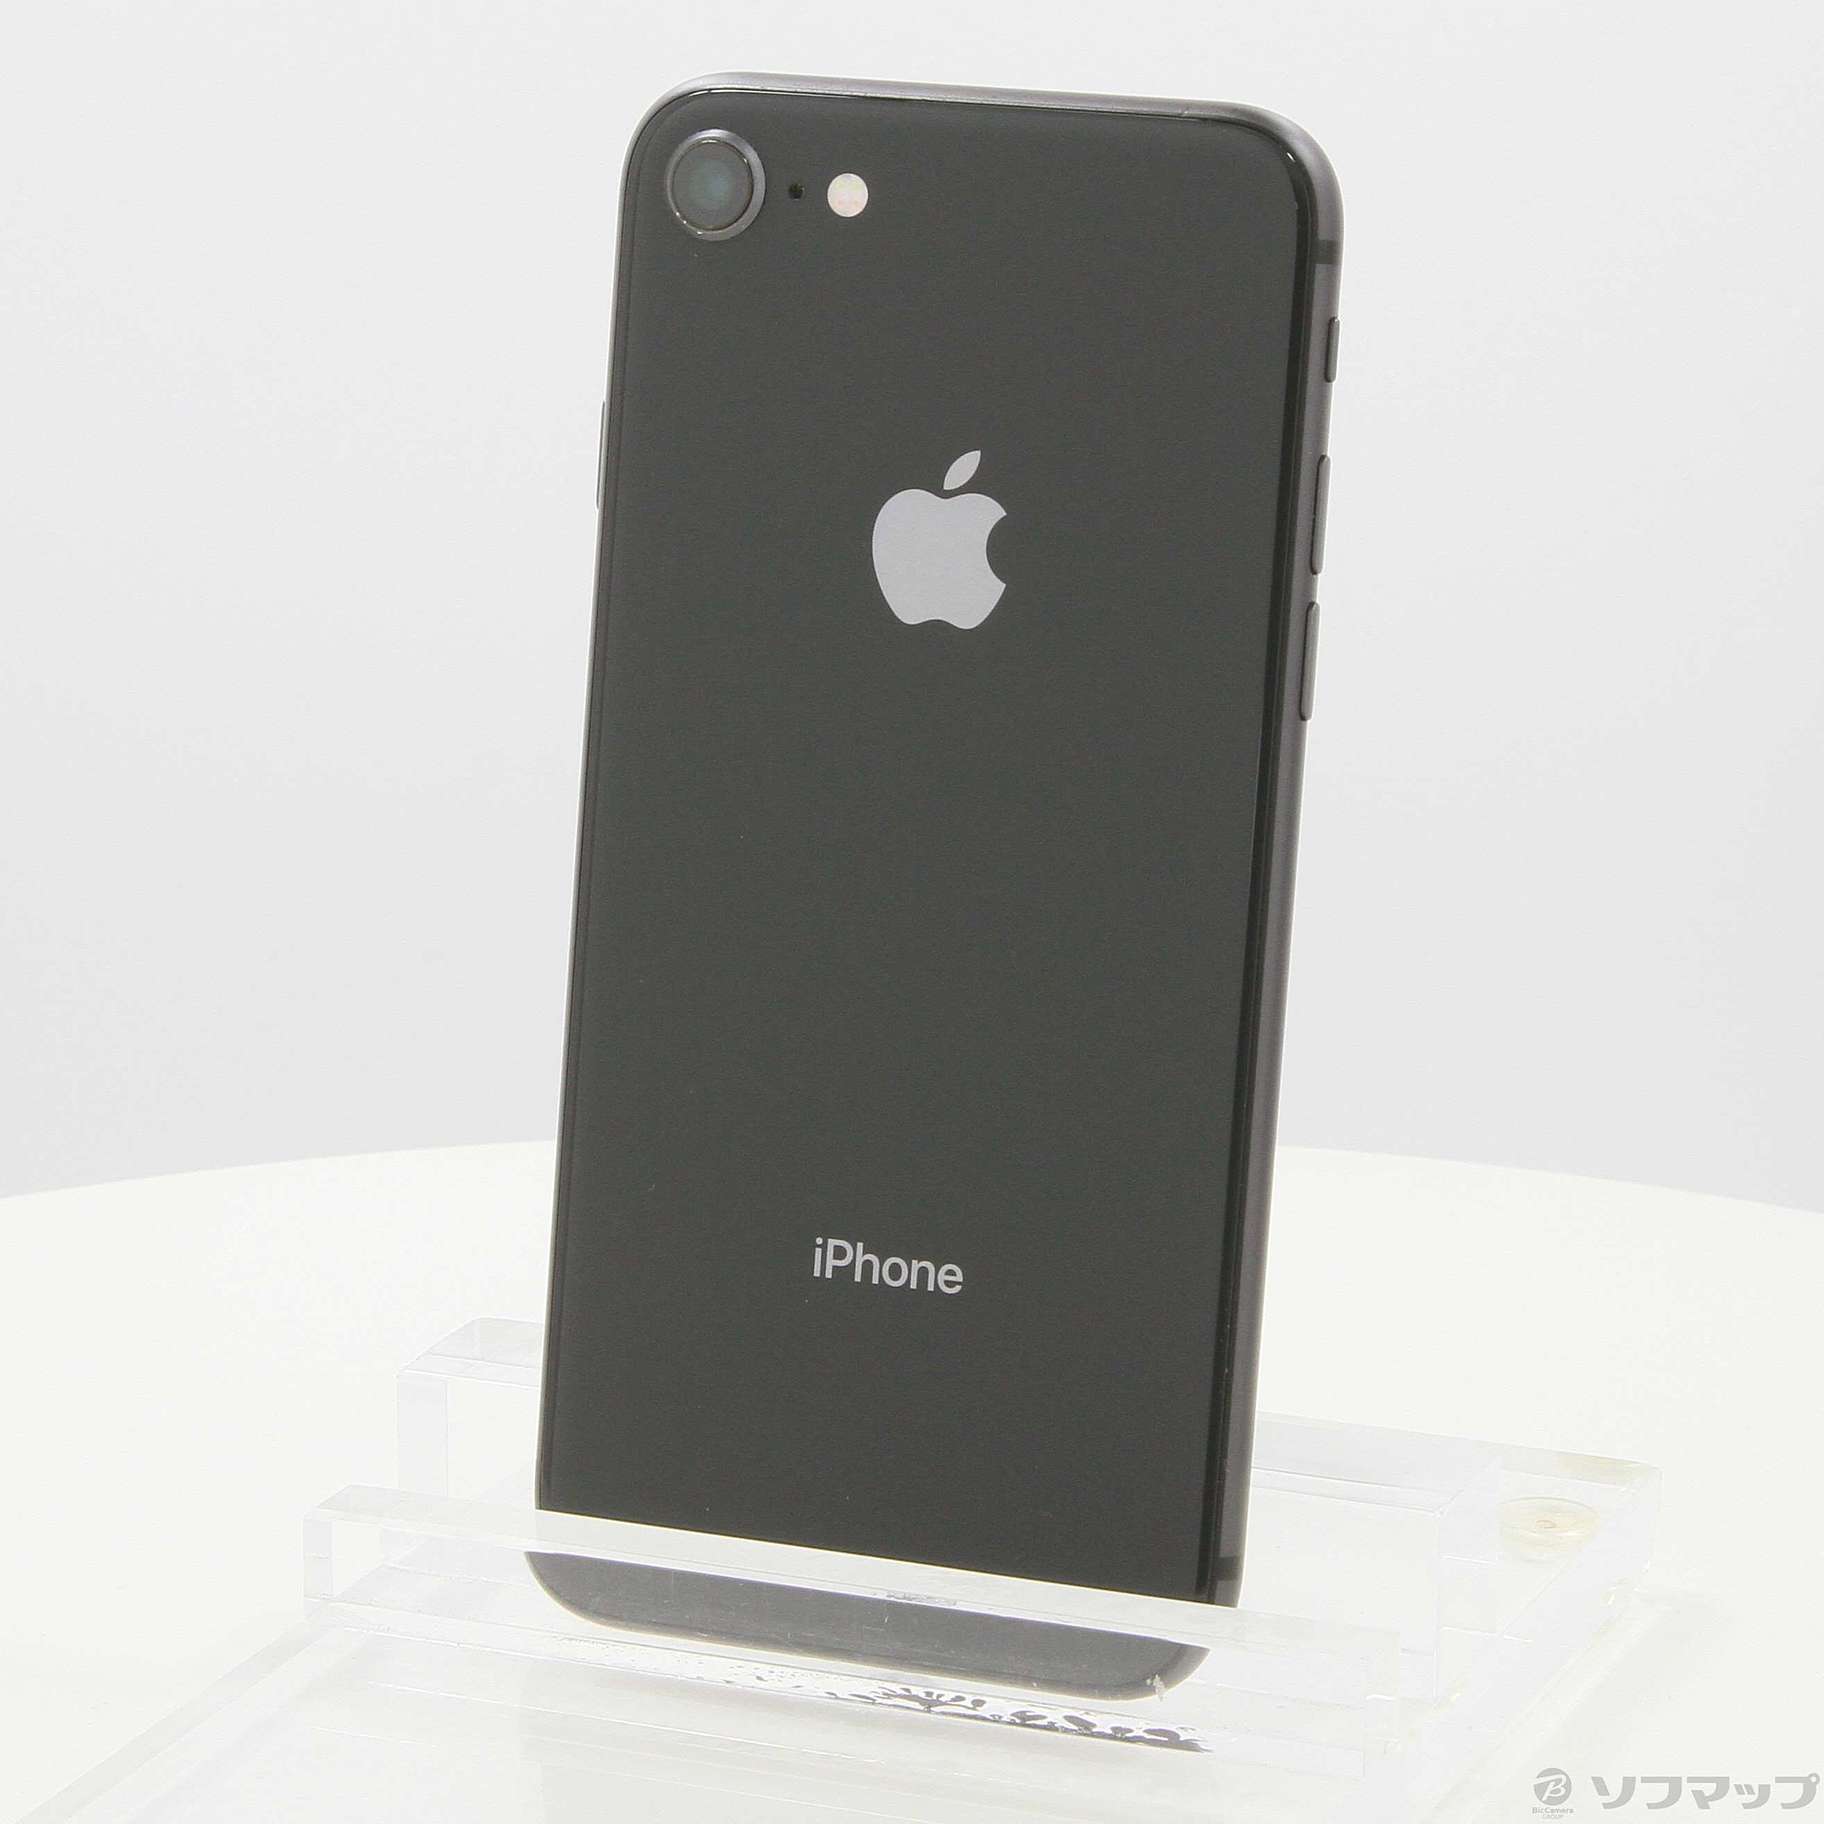 SIMフリー iPhone 8 256GB スペースグレー